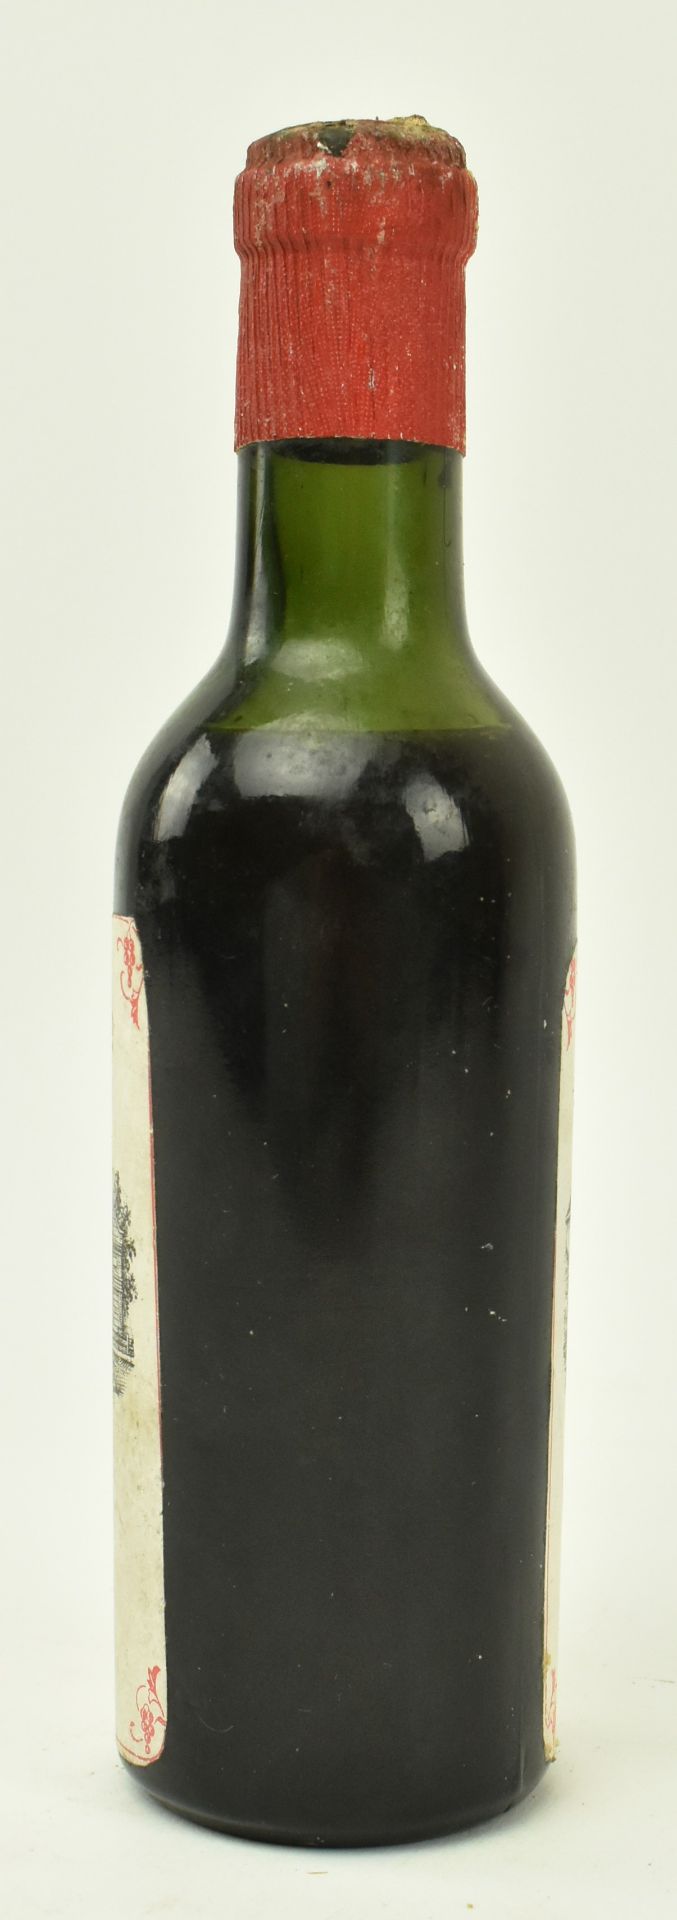 1943 CHATEAU LA GARDE RED WINE BOTTLE - Image 6 of 6